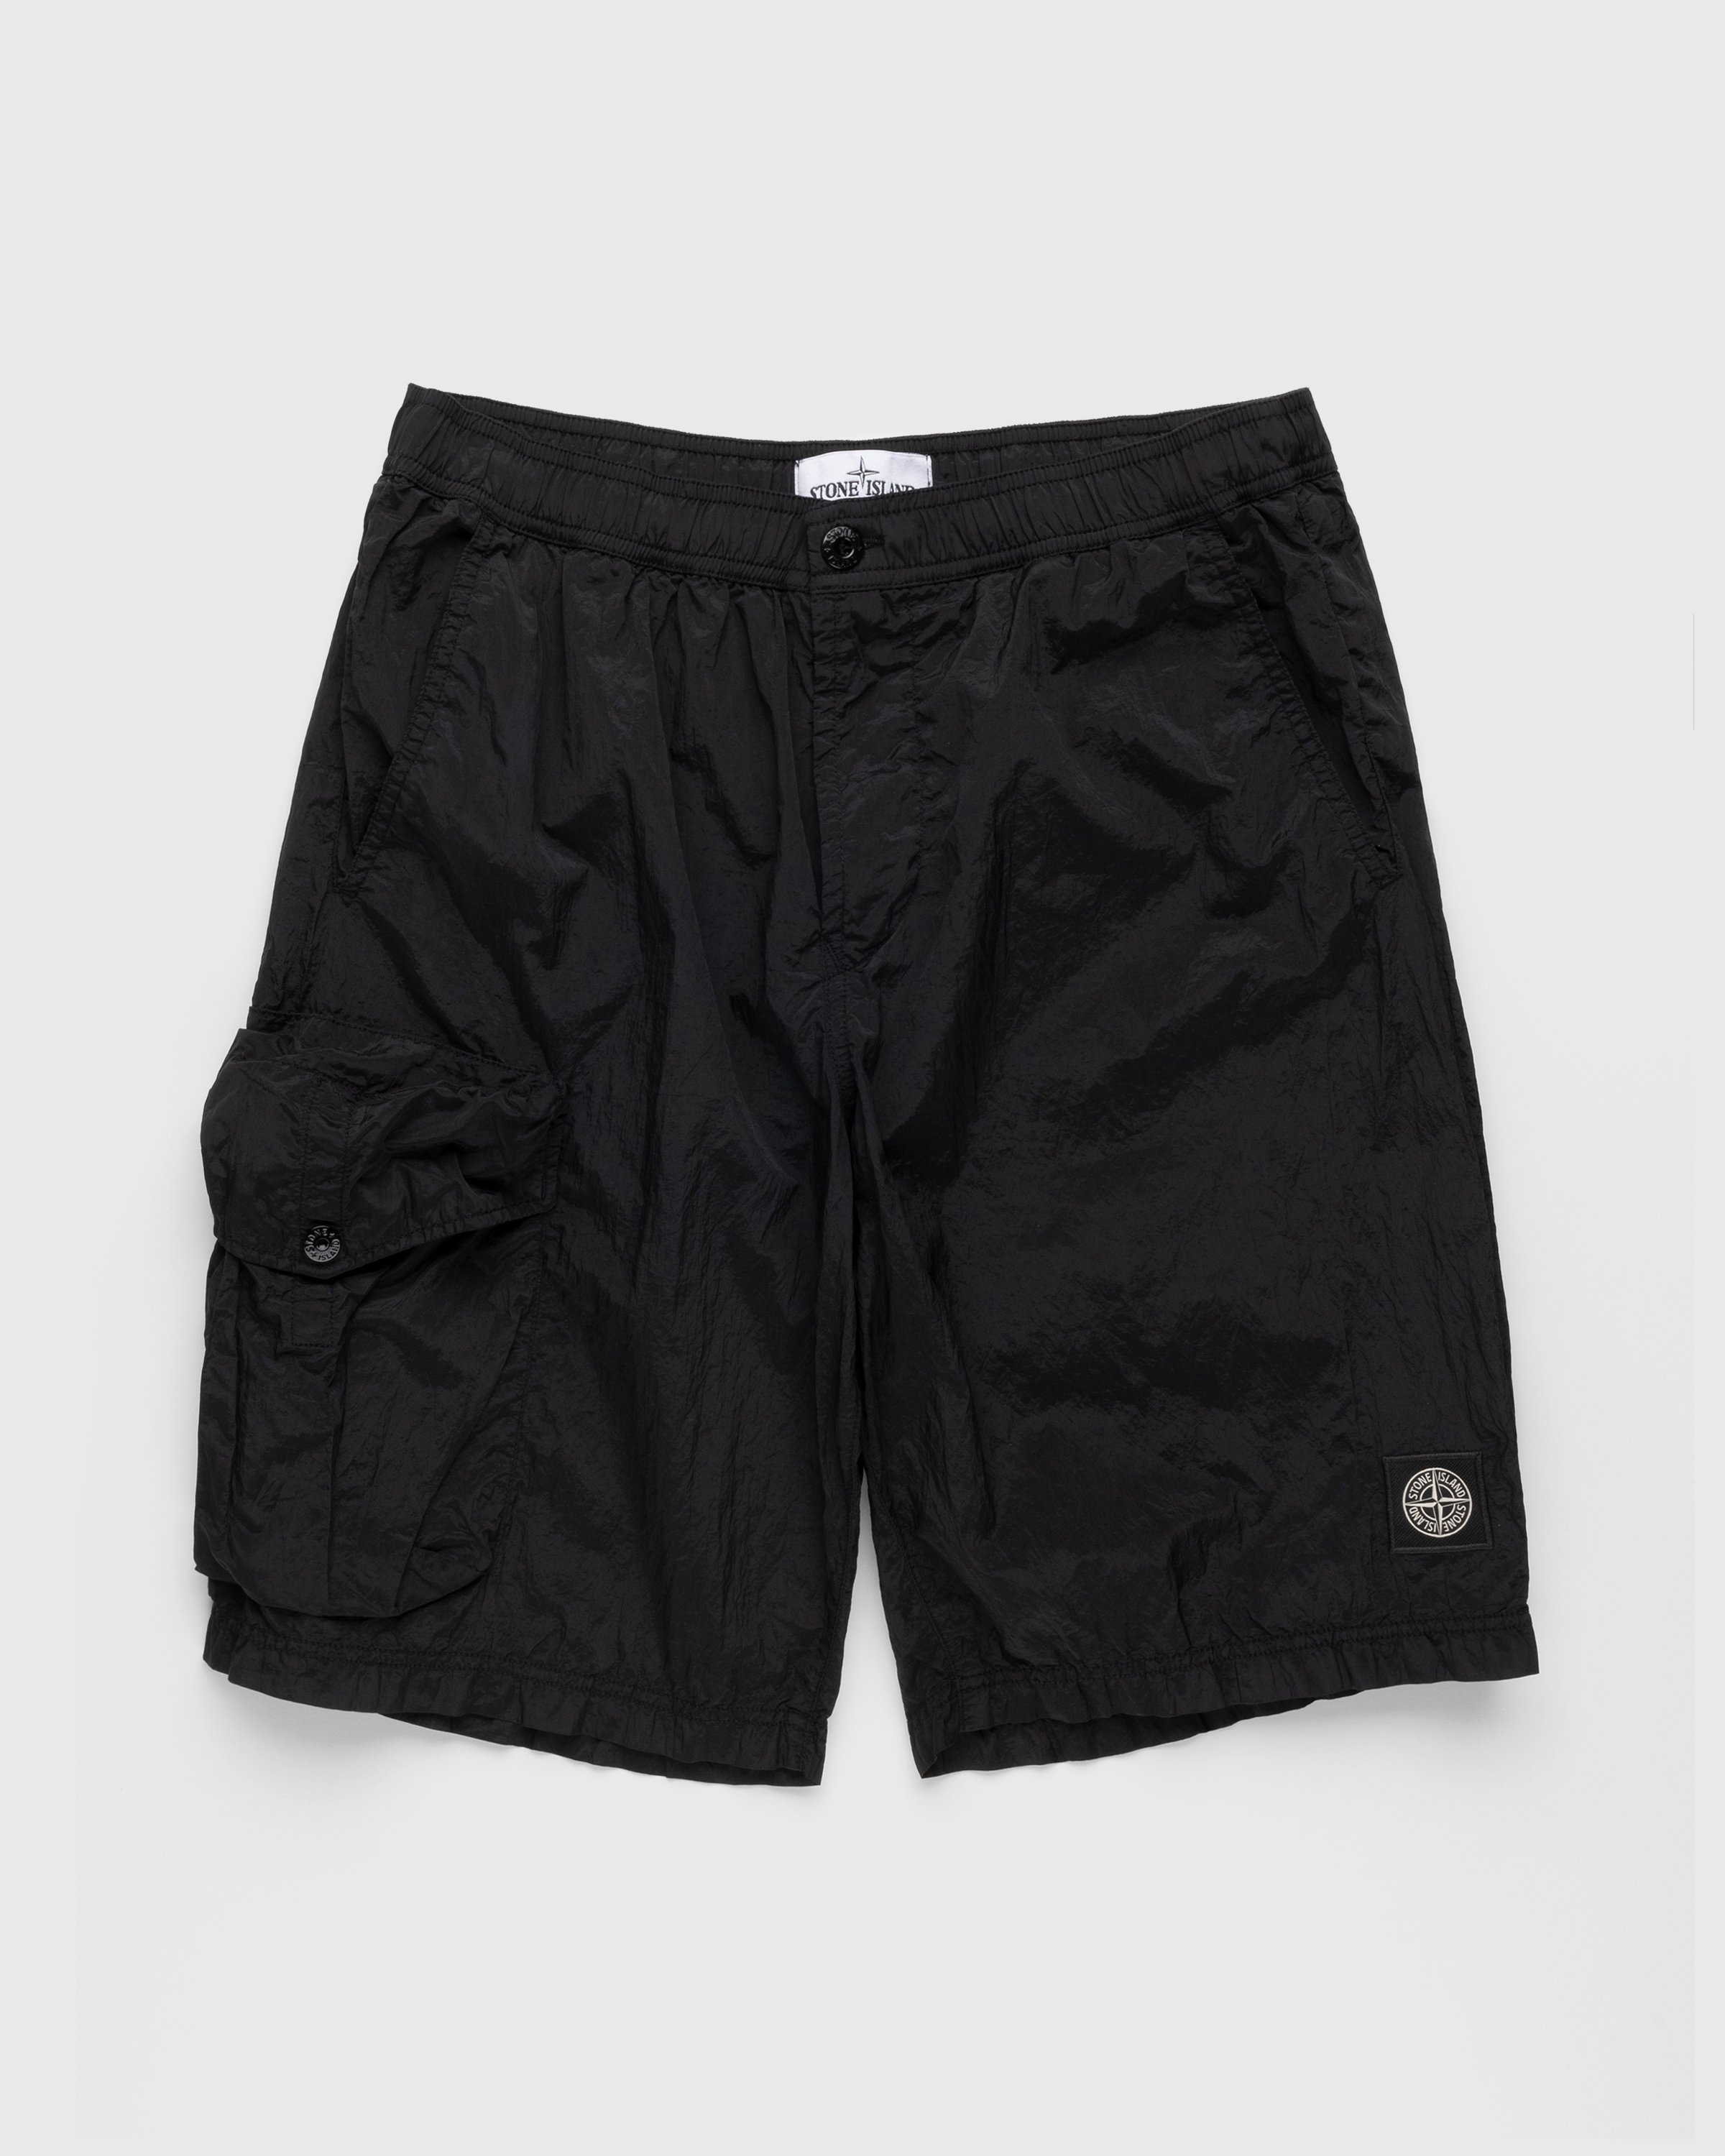 Stone Island - B0543 Nylon Metal Swim Shorts - Clothing - Black - Image 1